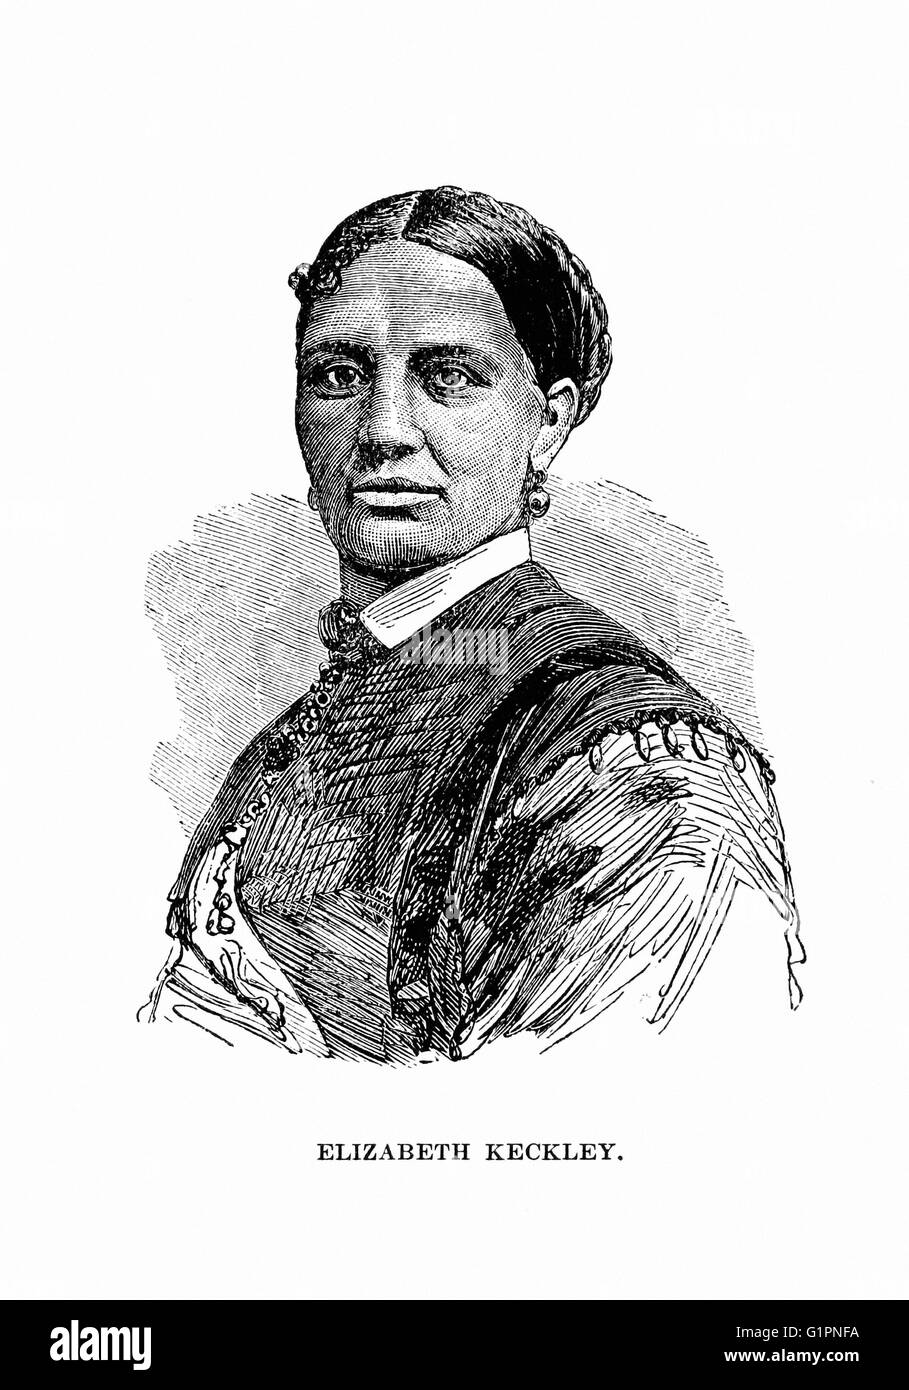 ELIZABETH KECKLEY (1818-1907). American seamstress, civil activist, and memoirist; a former slave and confidante of Mary Todd Lincoln. Engraving, c1868. Stock Photo